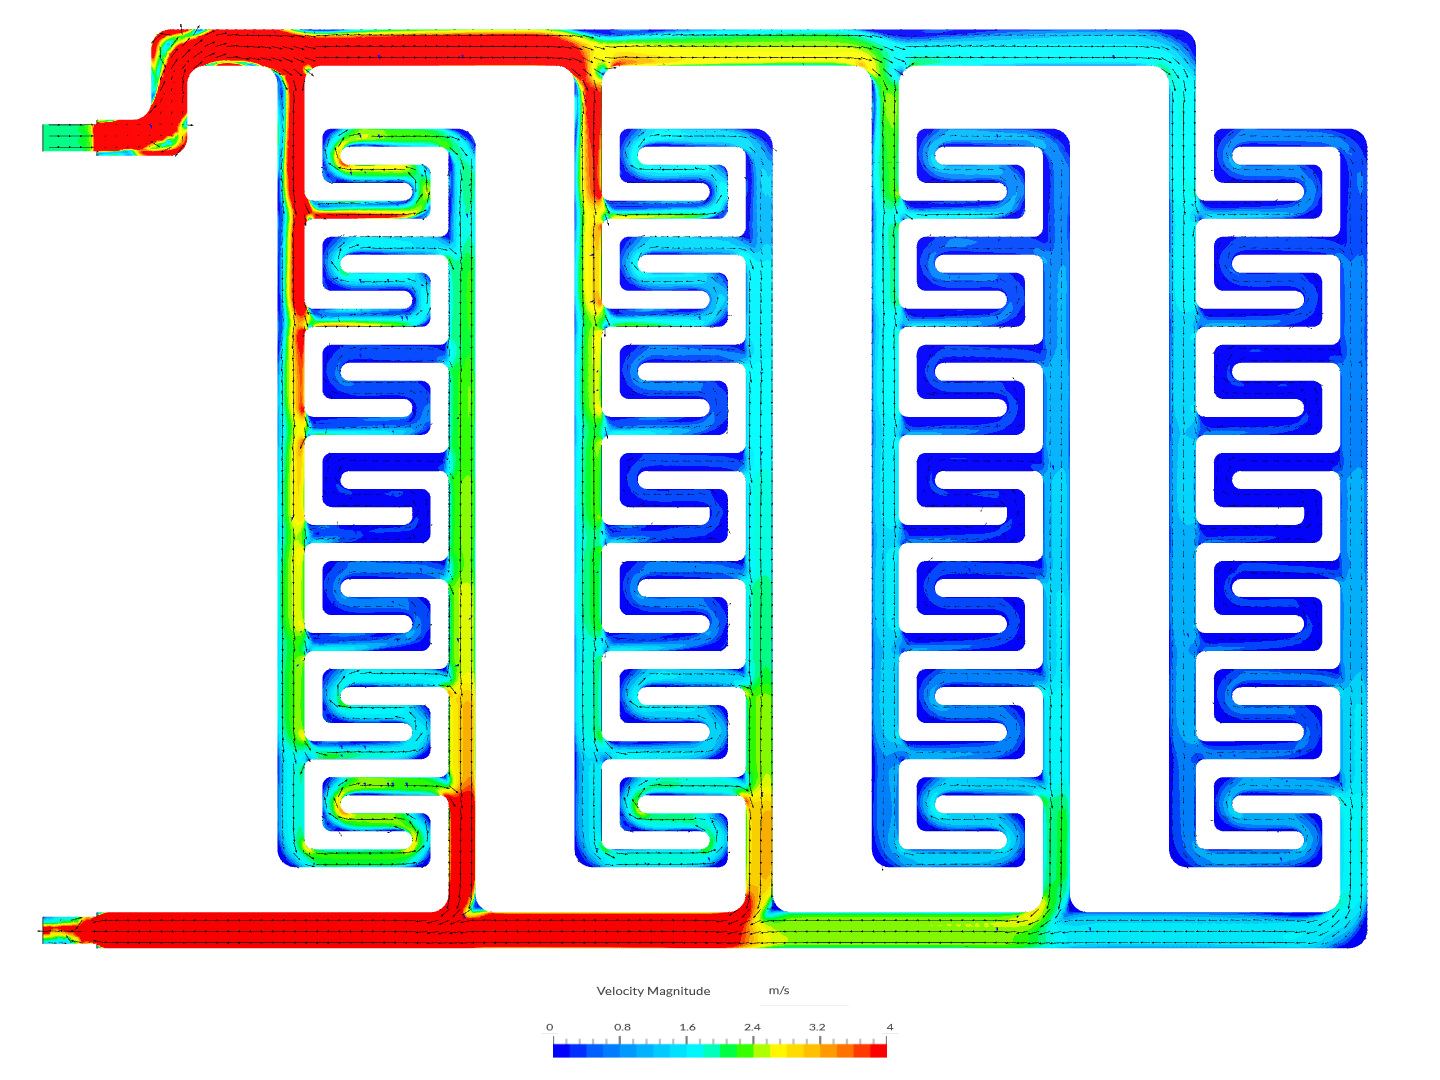 Cooling Plate EV - Full Copy - Copy image